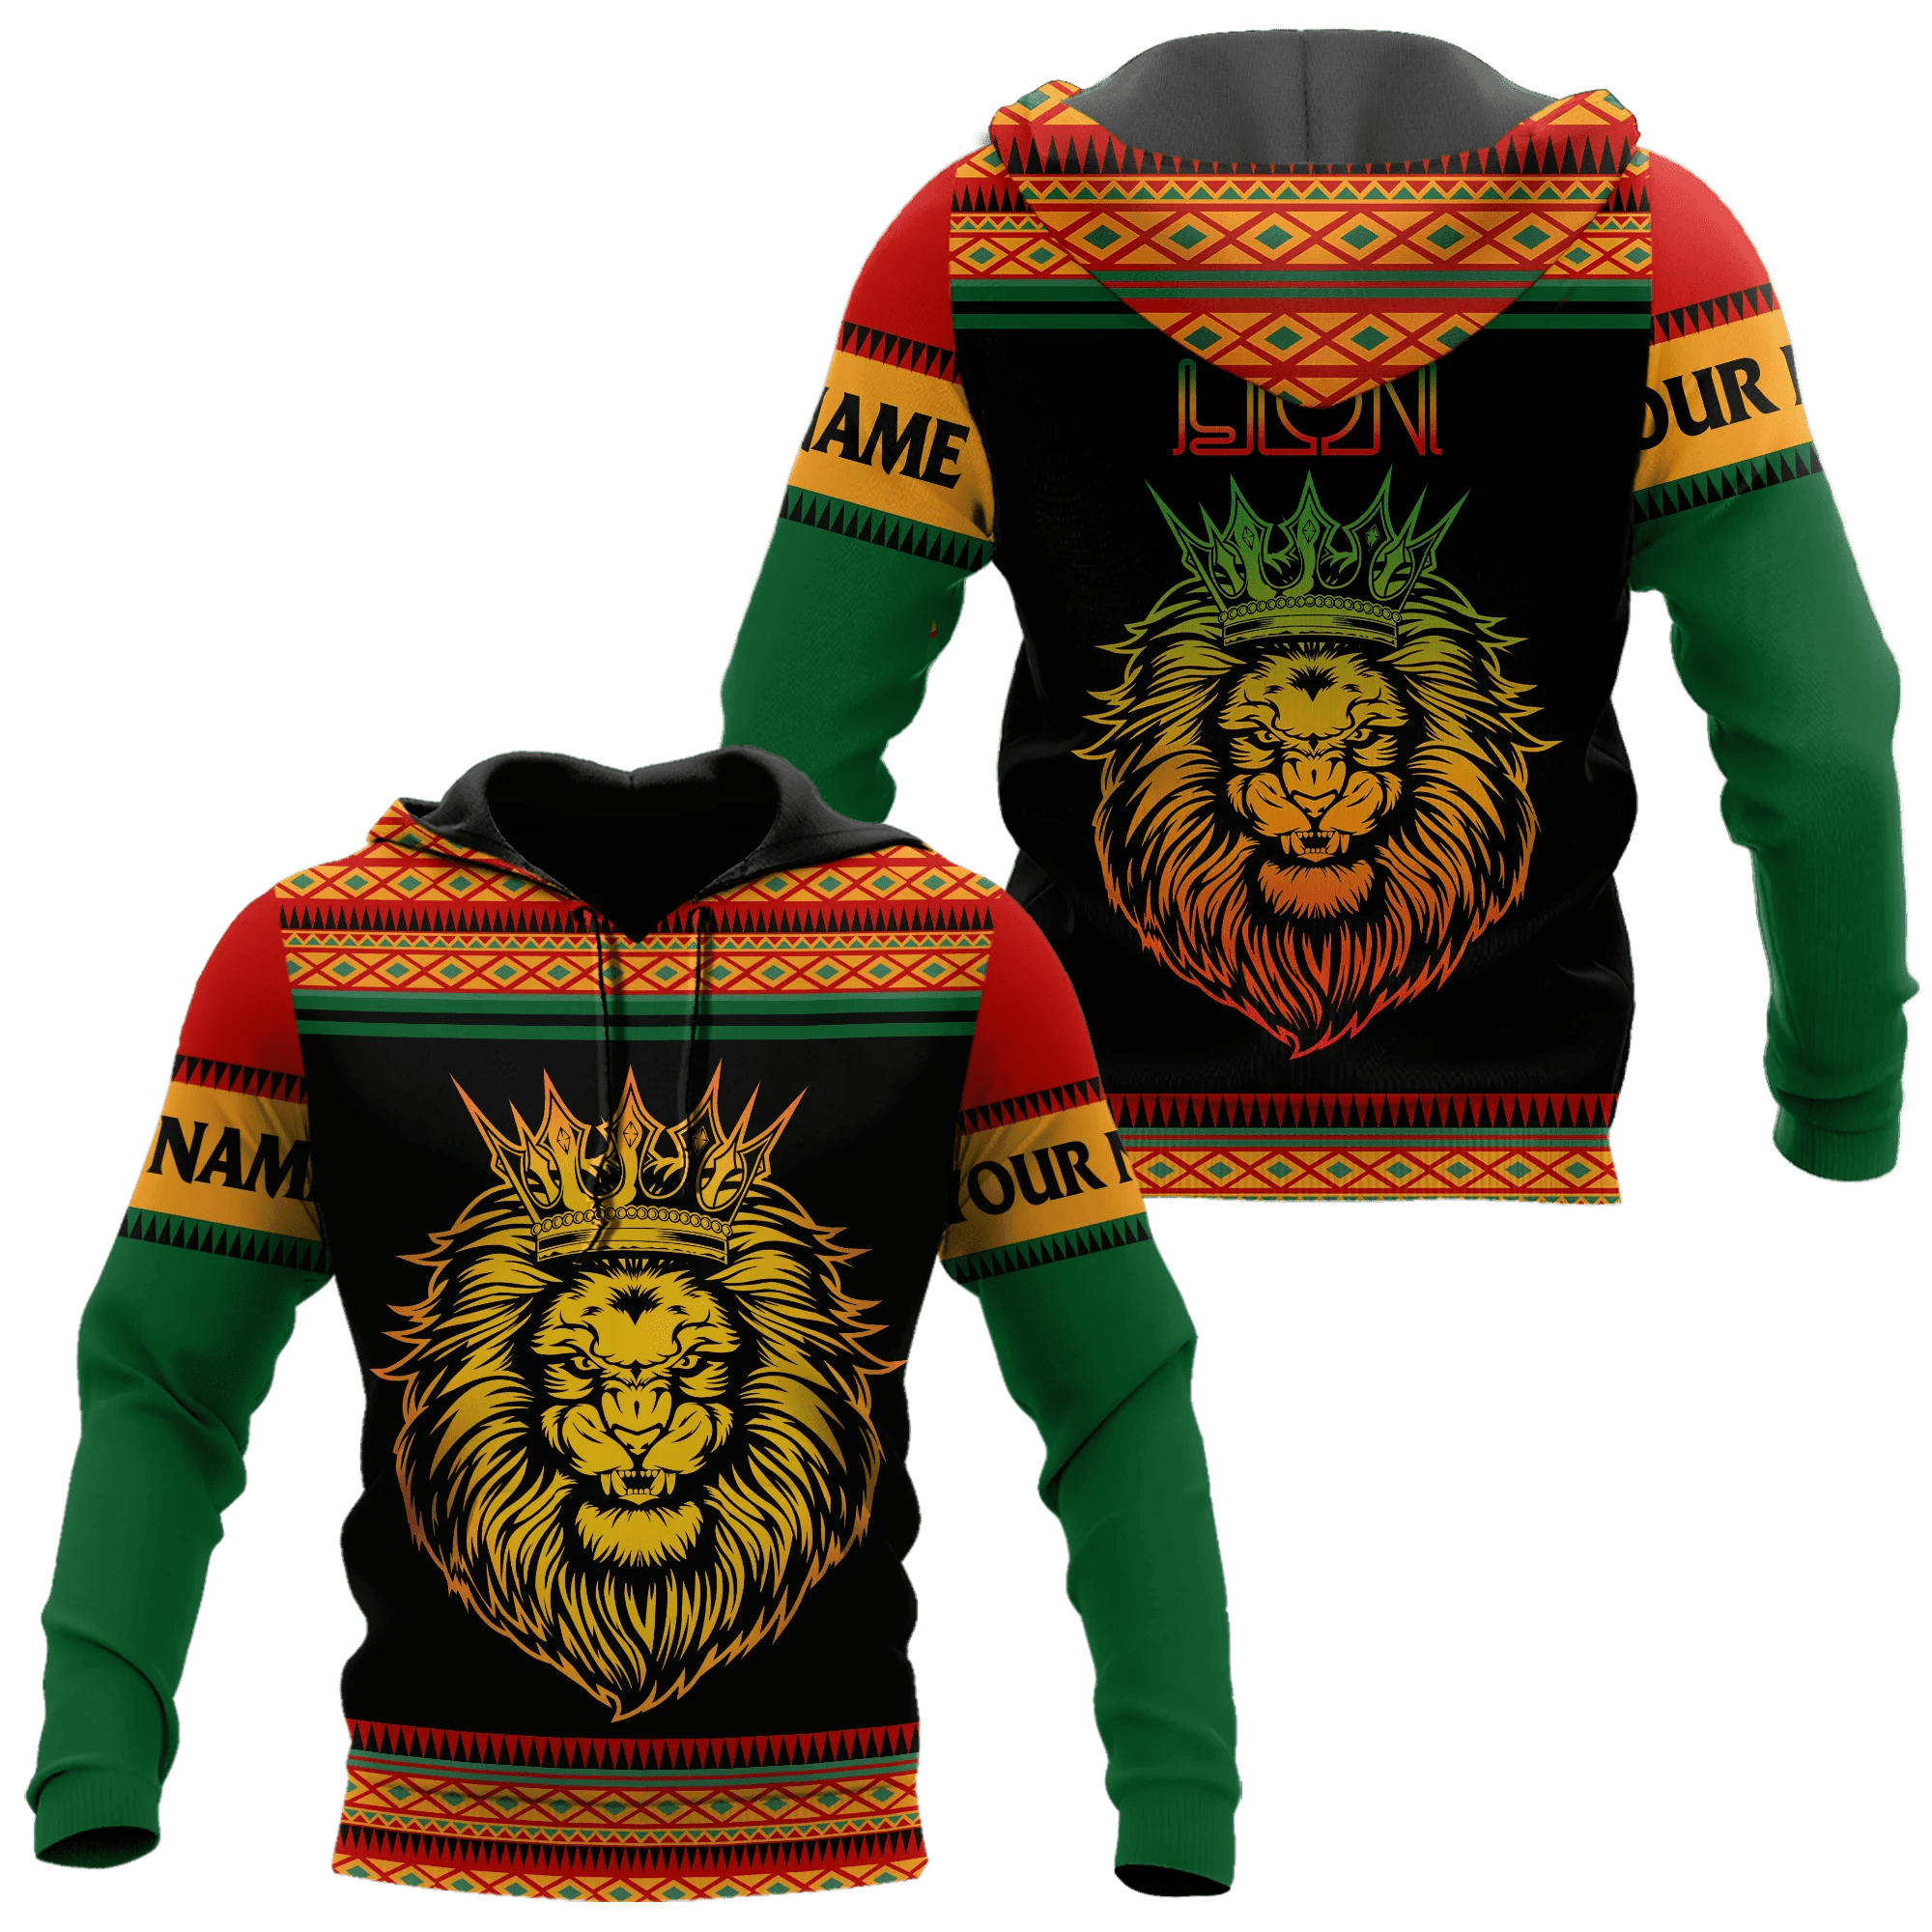 Juneteenth Tmarc Tee Customized Lion King African Shirts